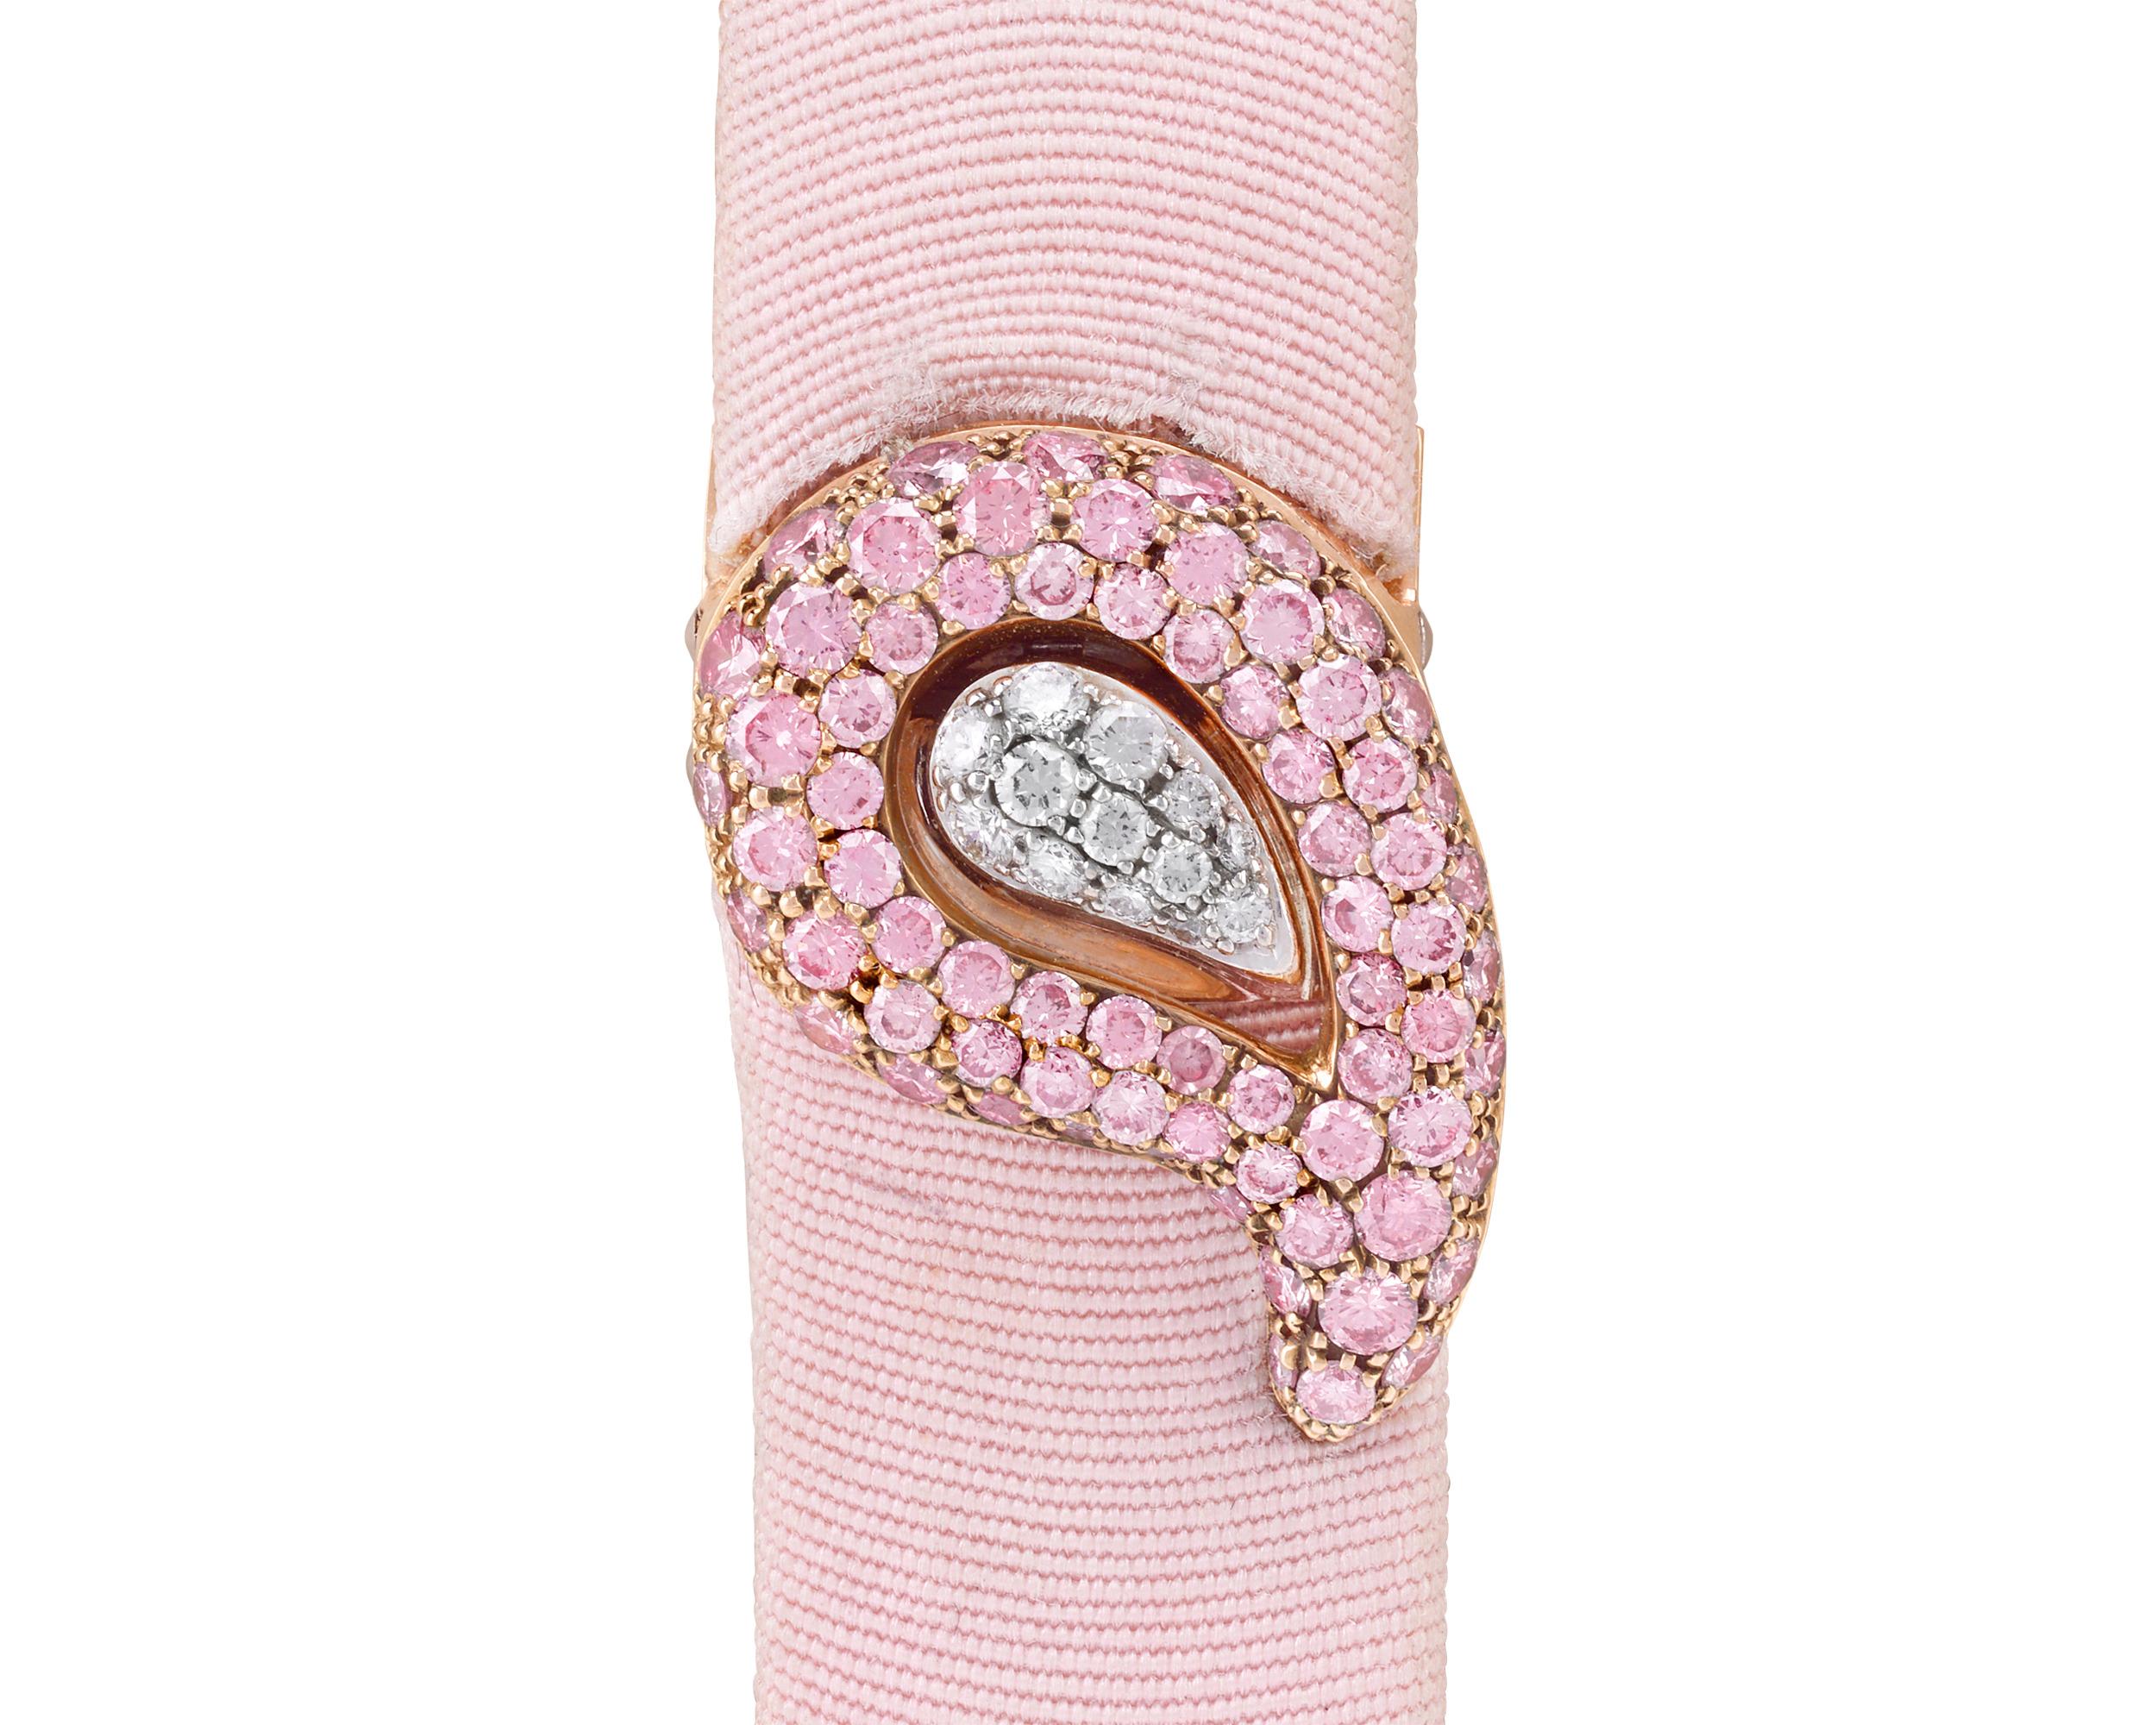 pink diamond watch